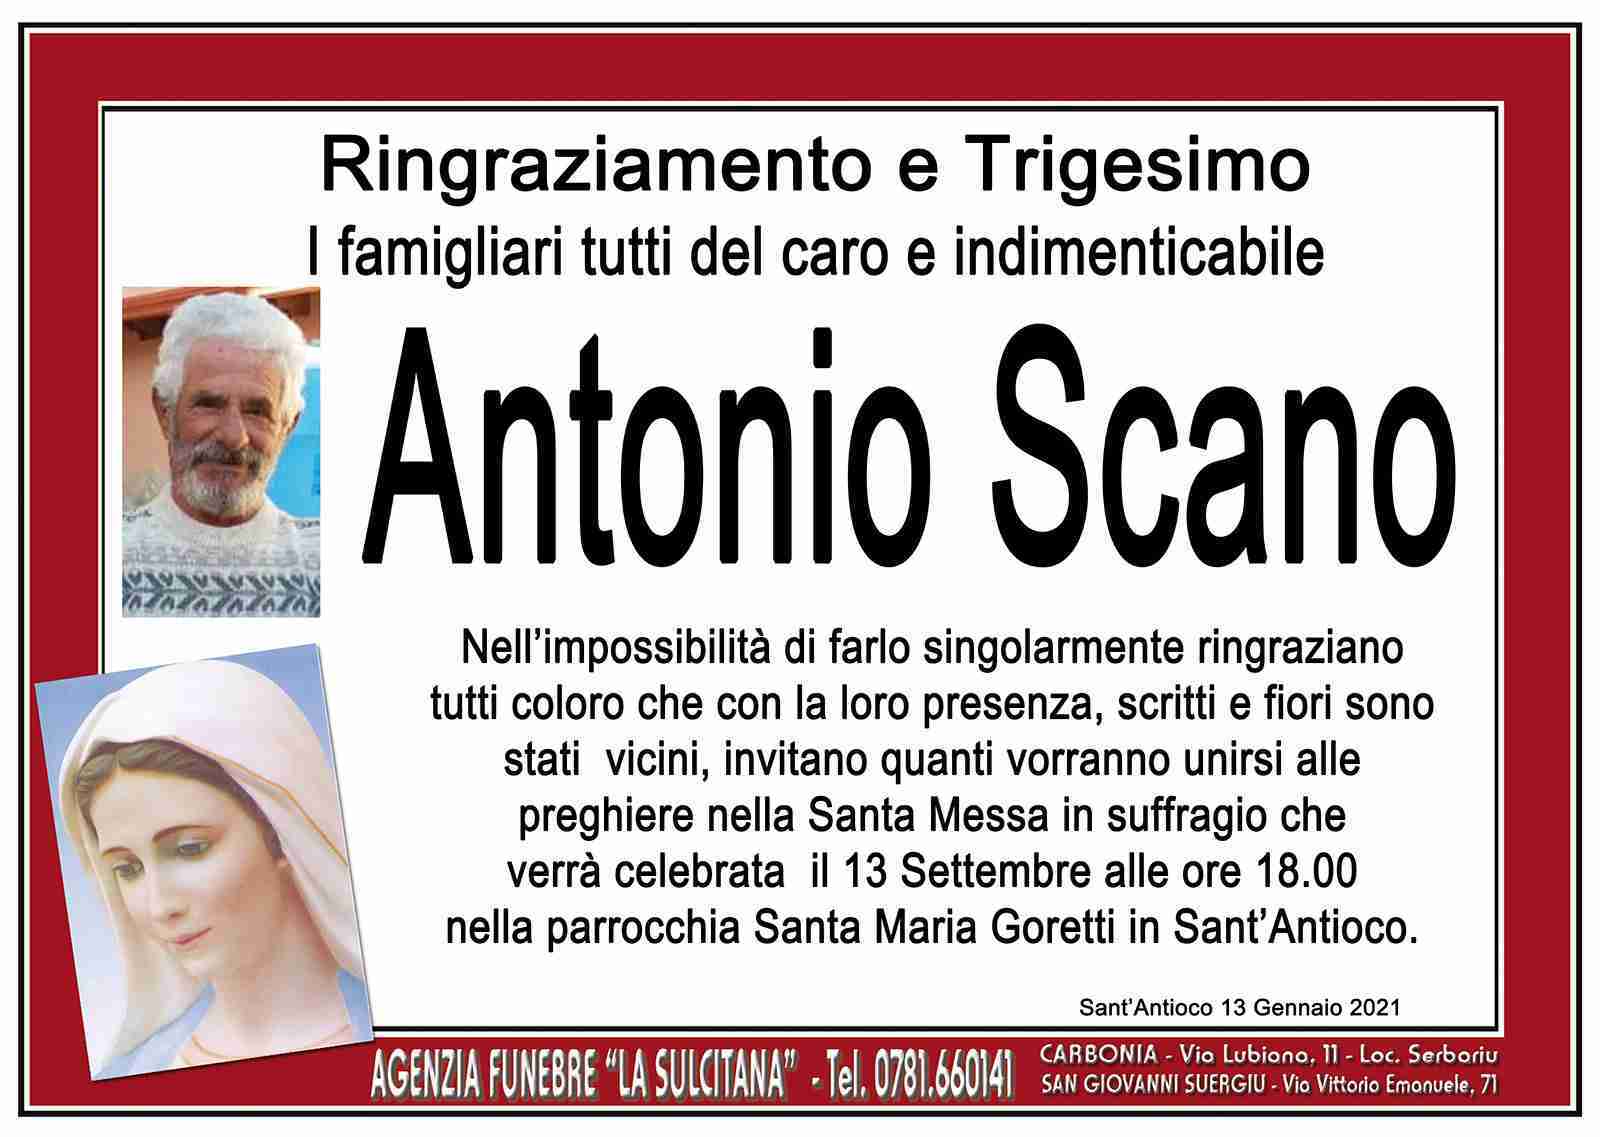 Antonio Scano